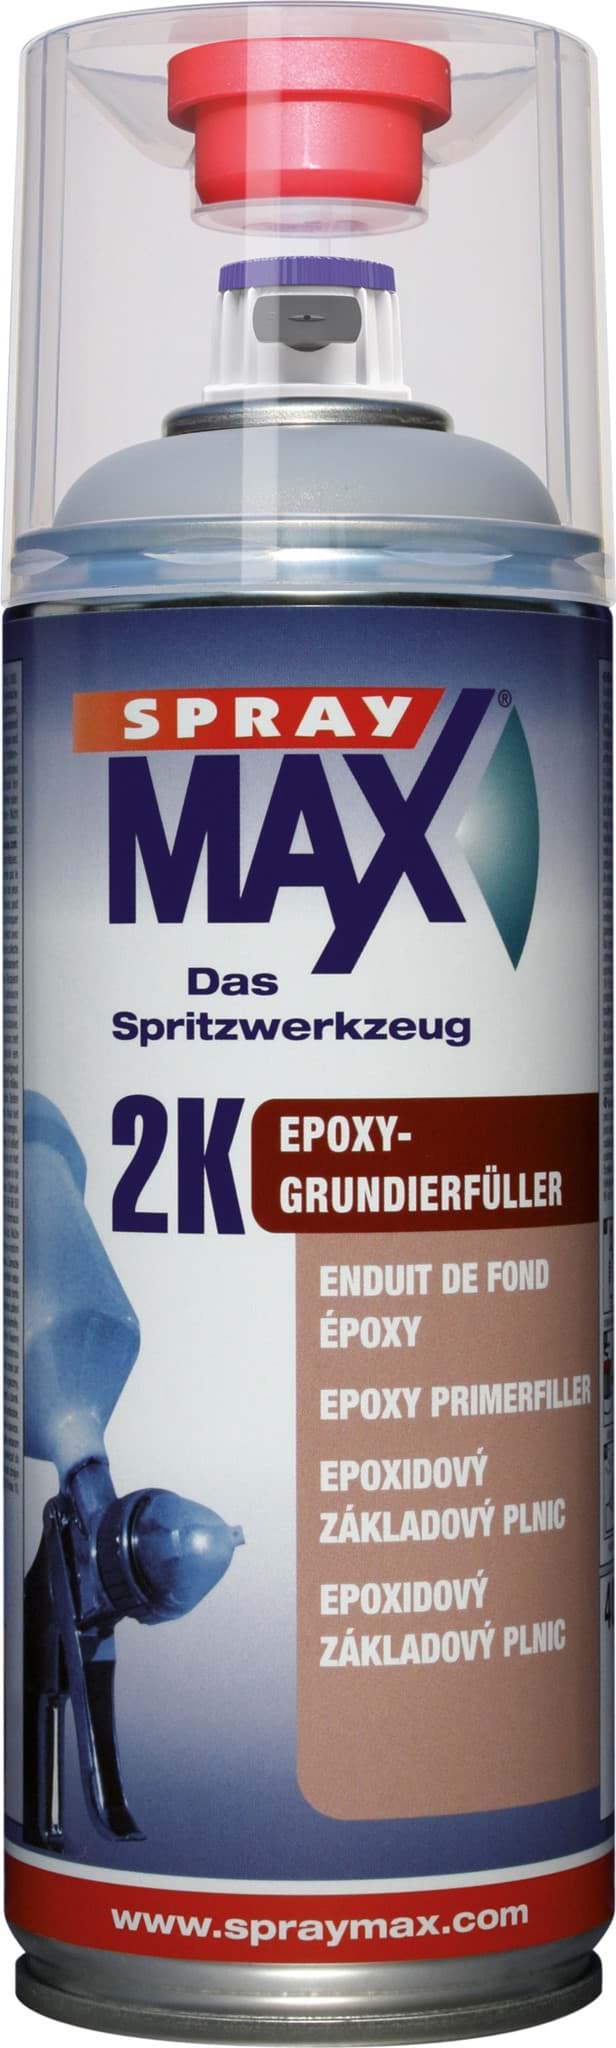 SprayMax 2K Epoxy-Grundierfüller grau Spray 400ml resmi